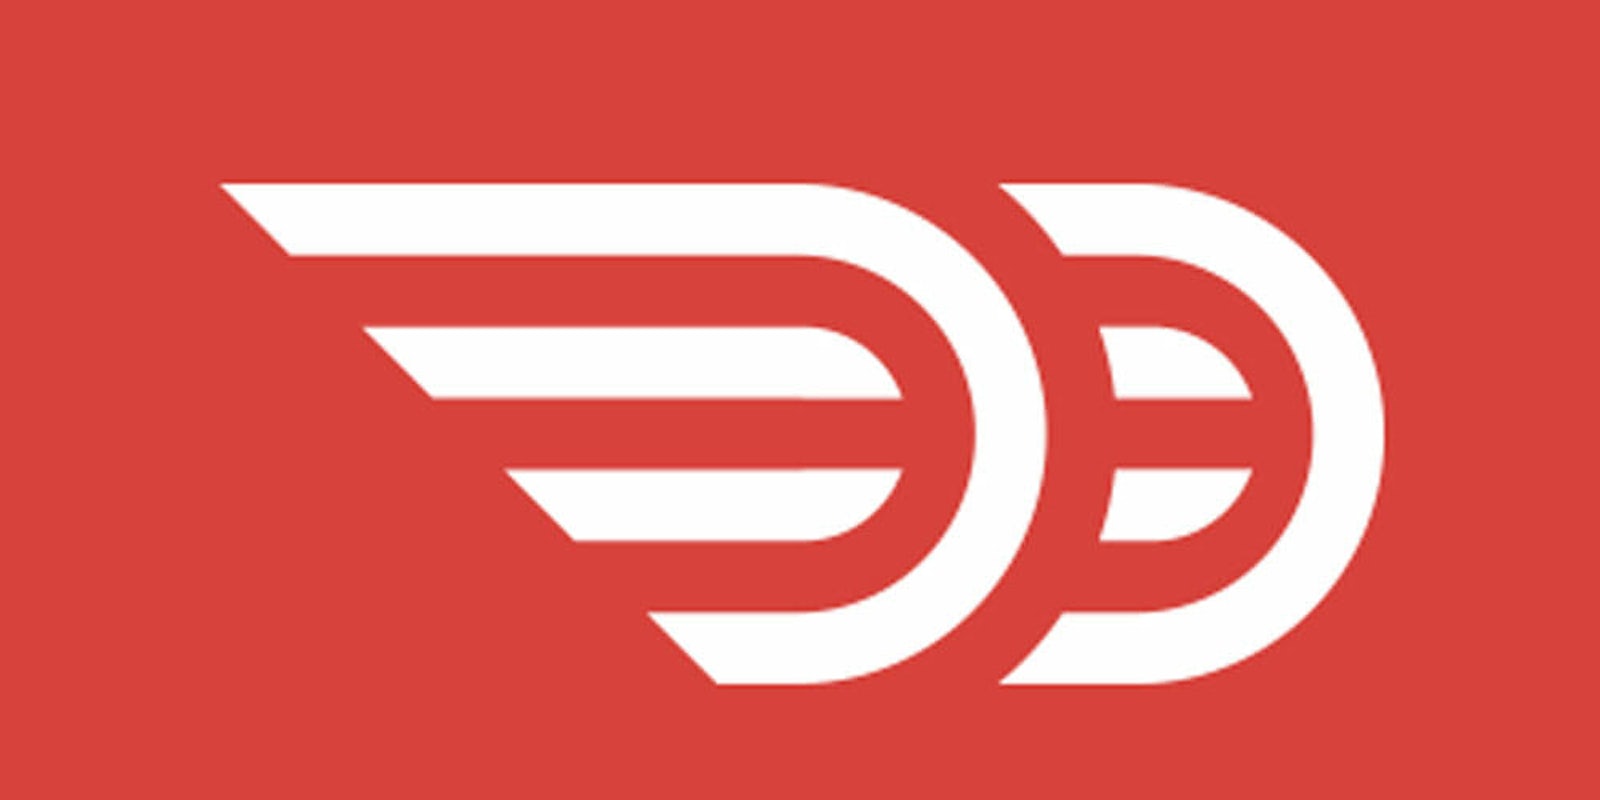 Door Dash logo on a red background